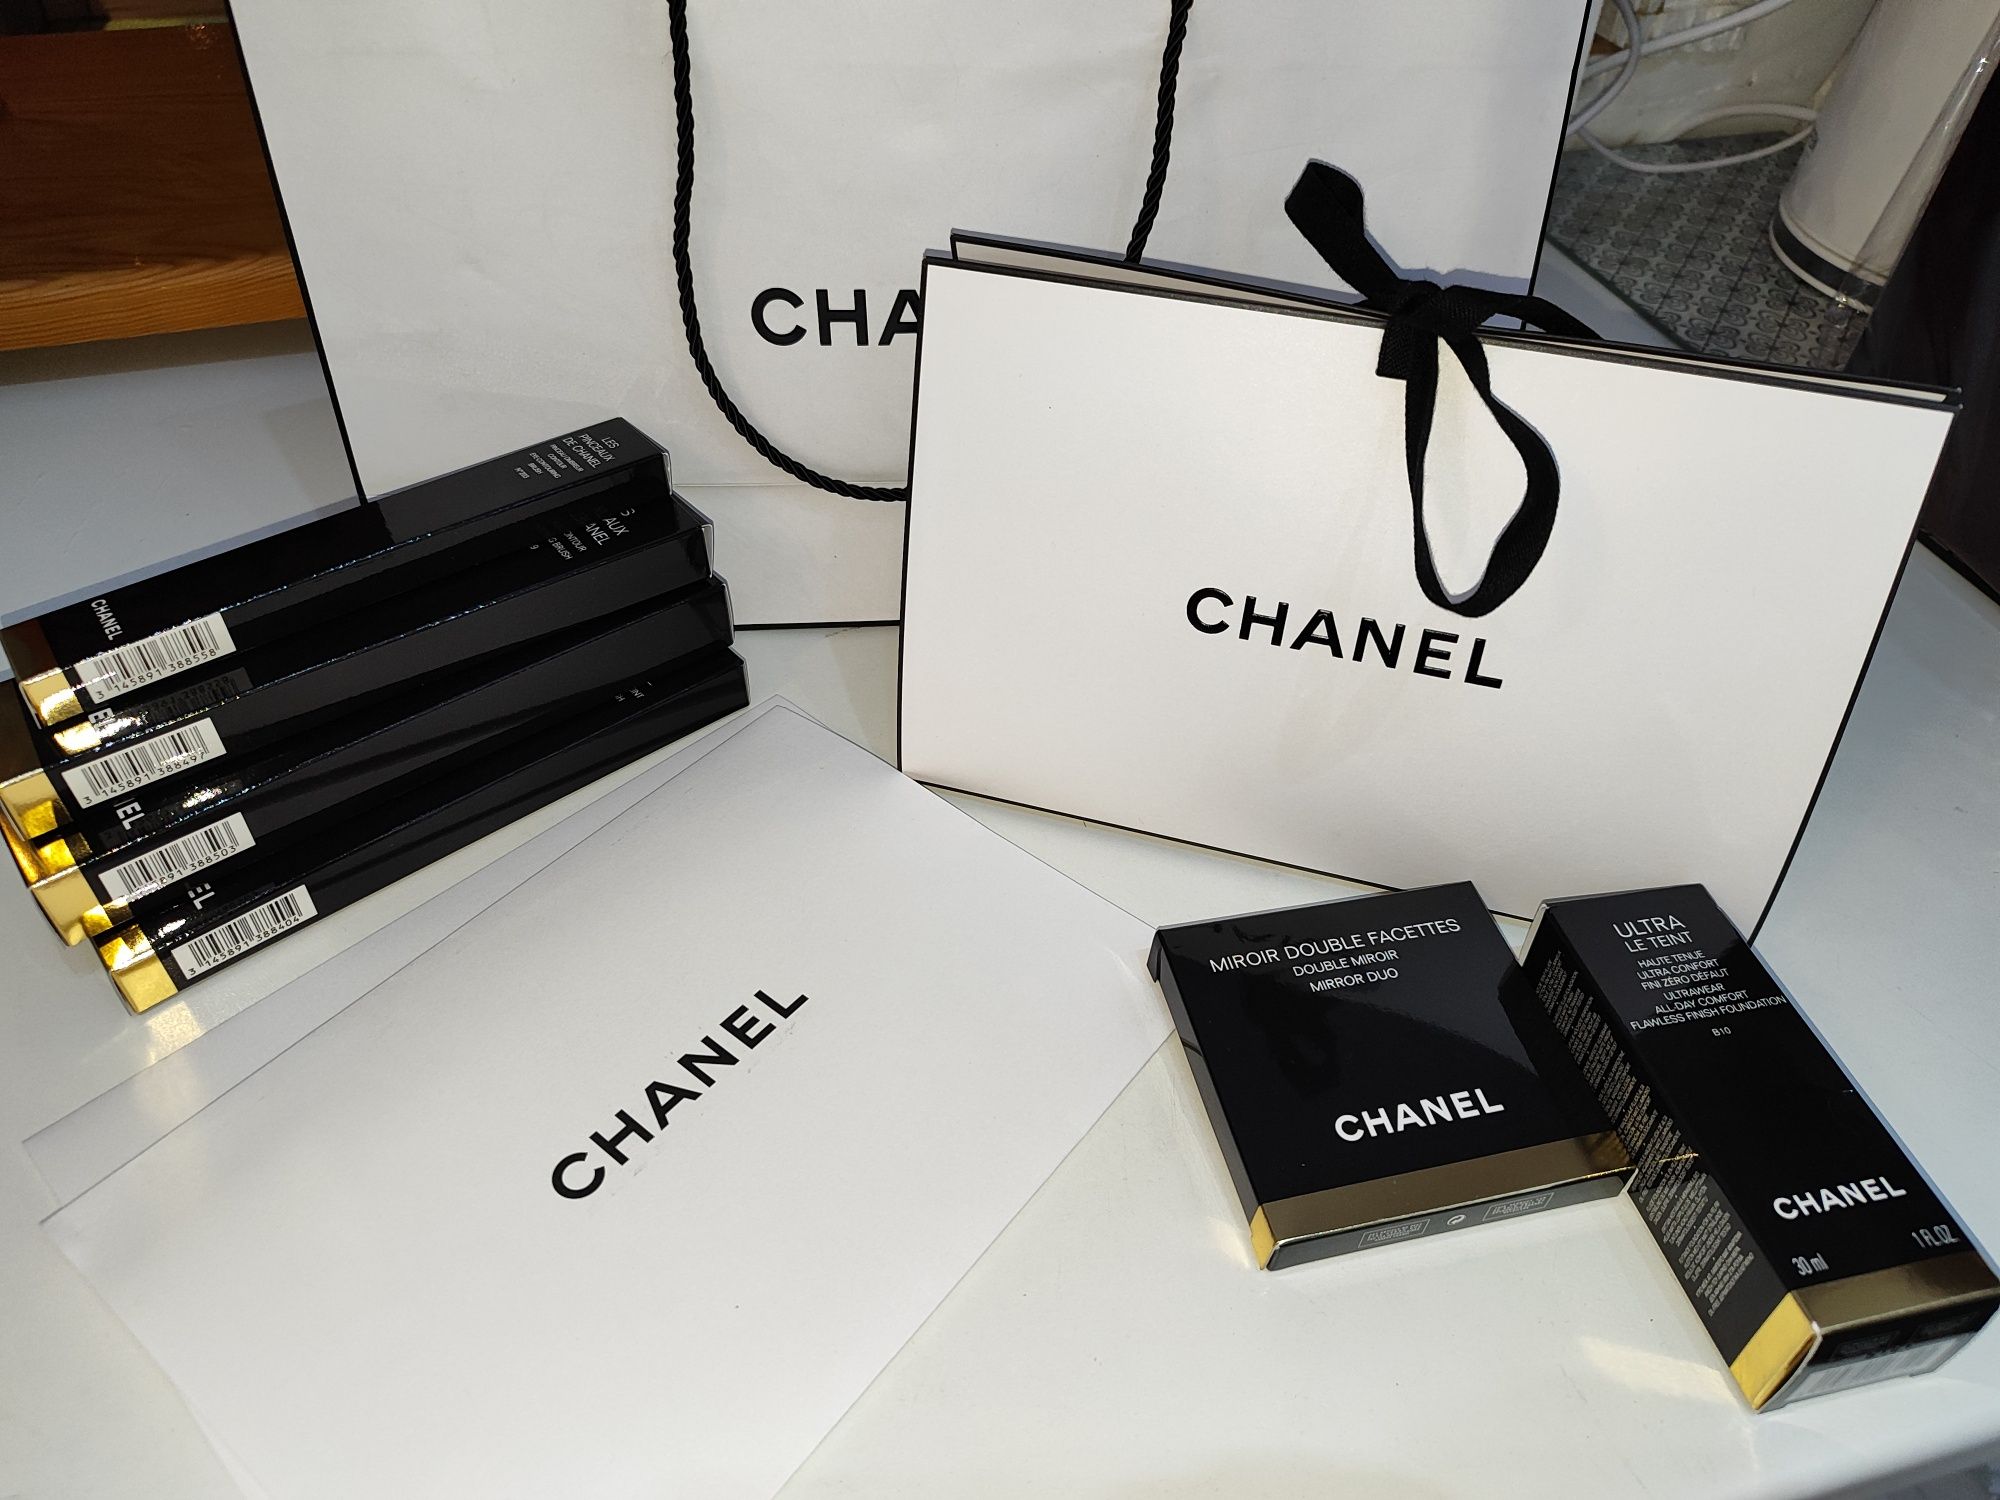 Zestaw Chanel torebki i inne